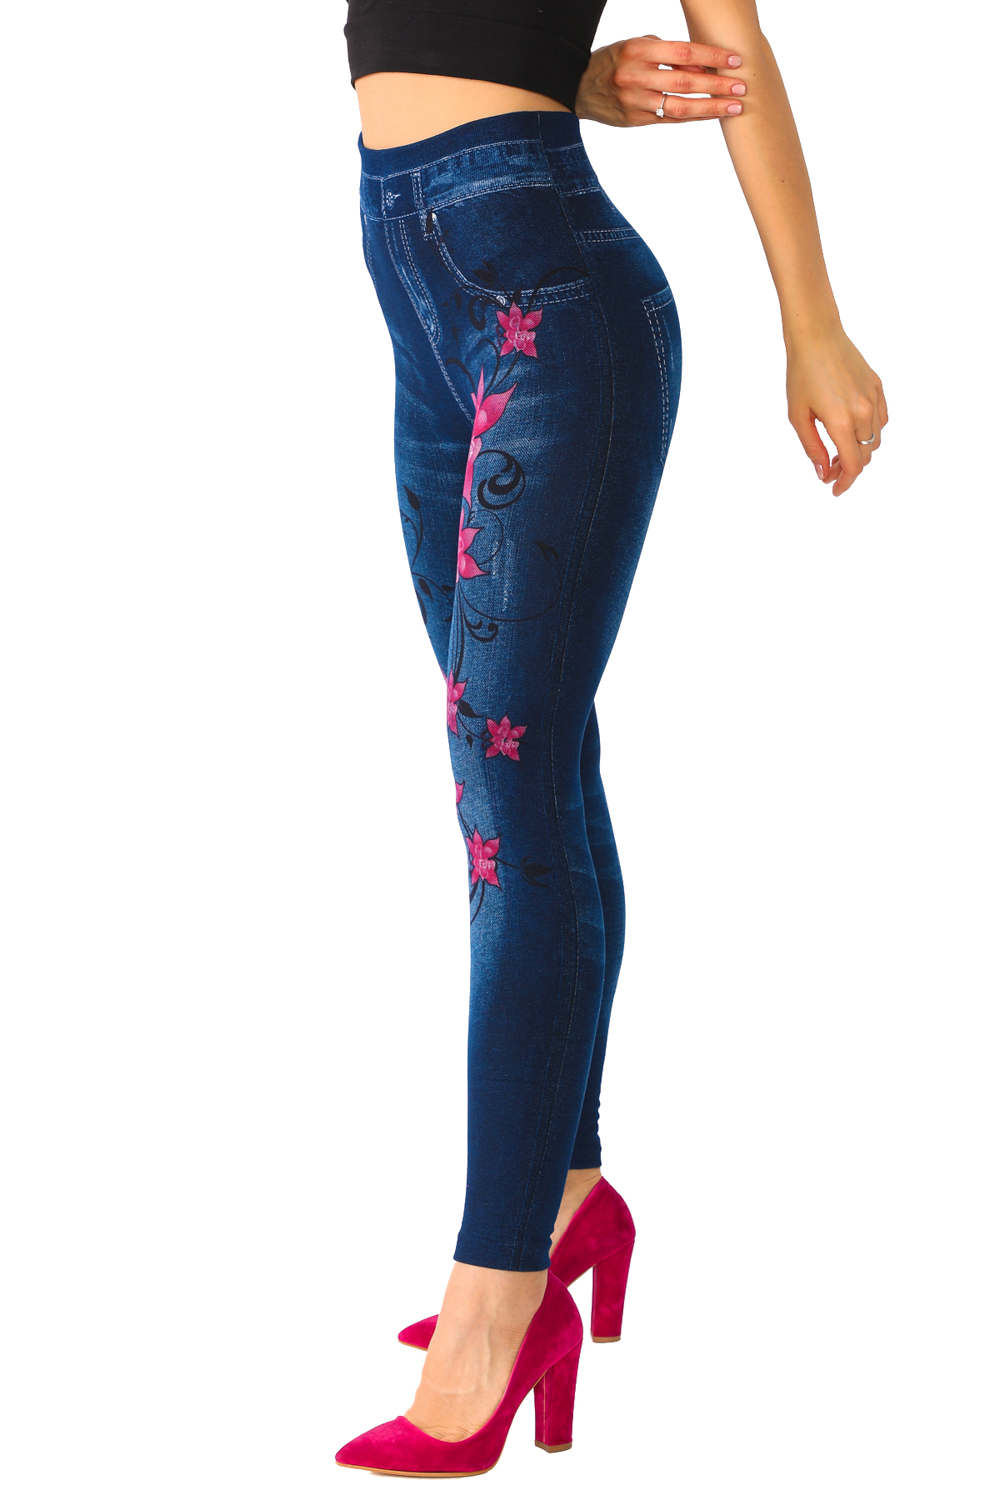 Jeans leggings with blue flower print, JENNIFER - Dress like Marie